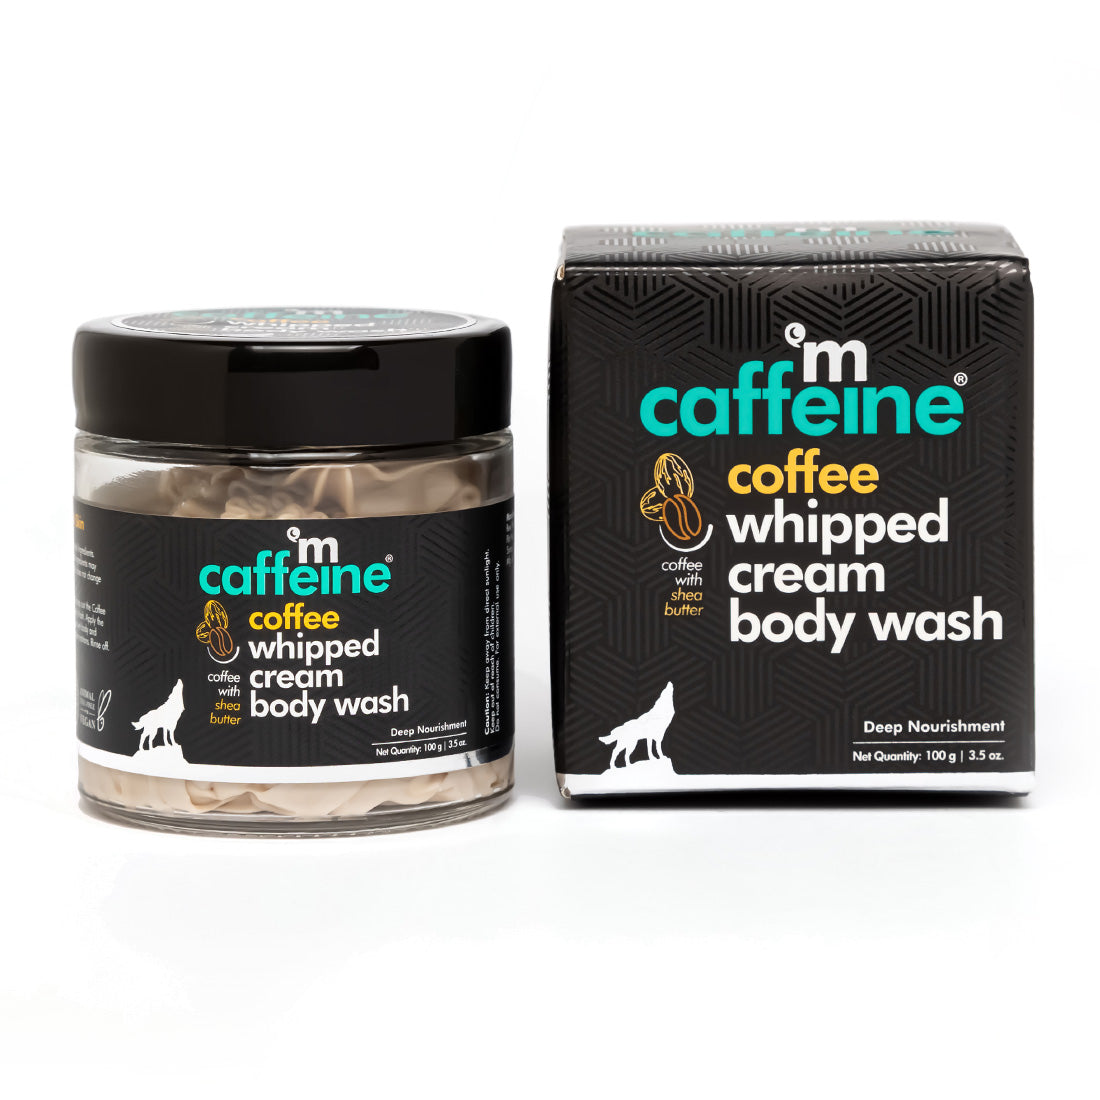 mCaffeine Coffee Whipped Cream Body Wash (Deep nourishment for soft & smooth skin )